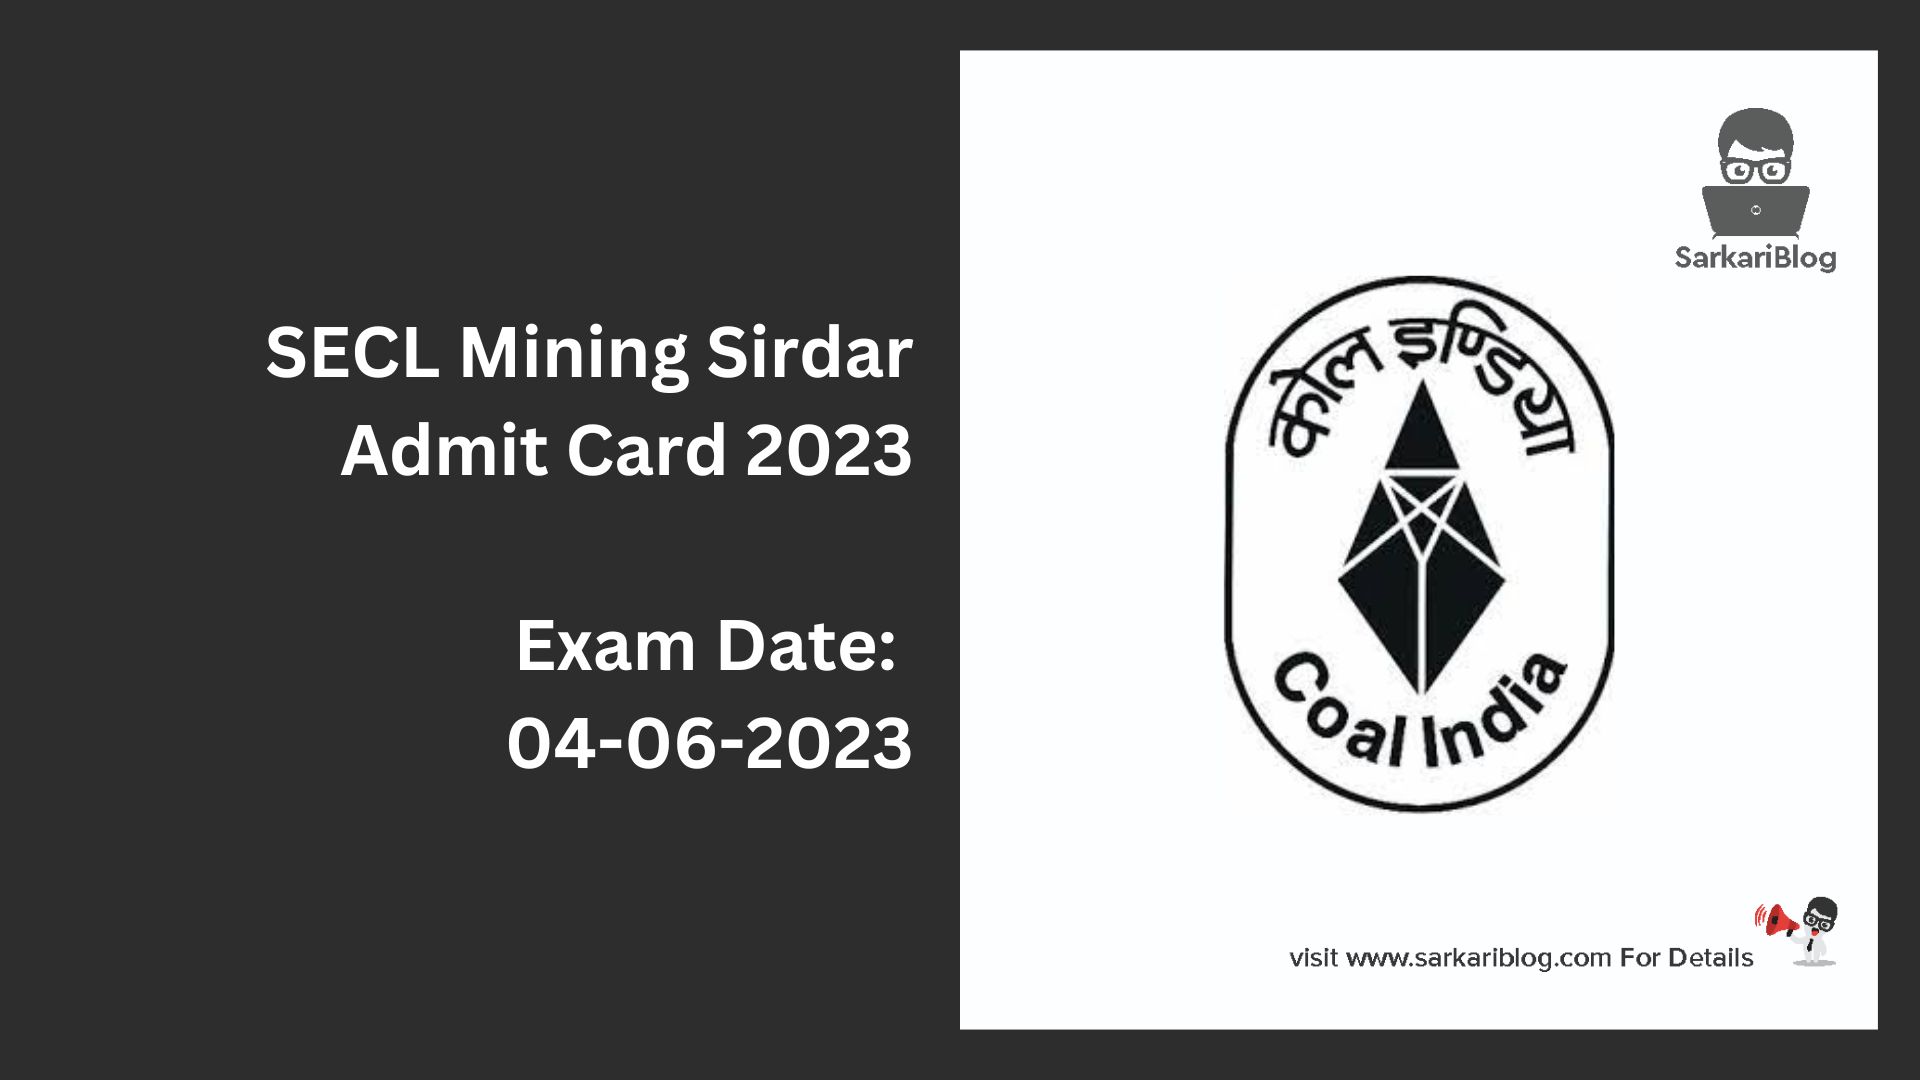 SECL Mining Sirdar Admit Card 2023